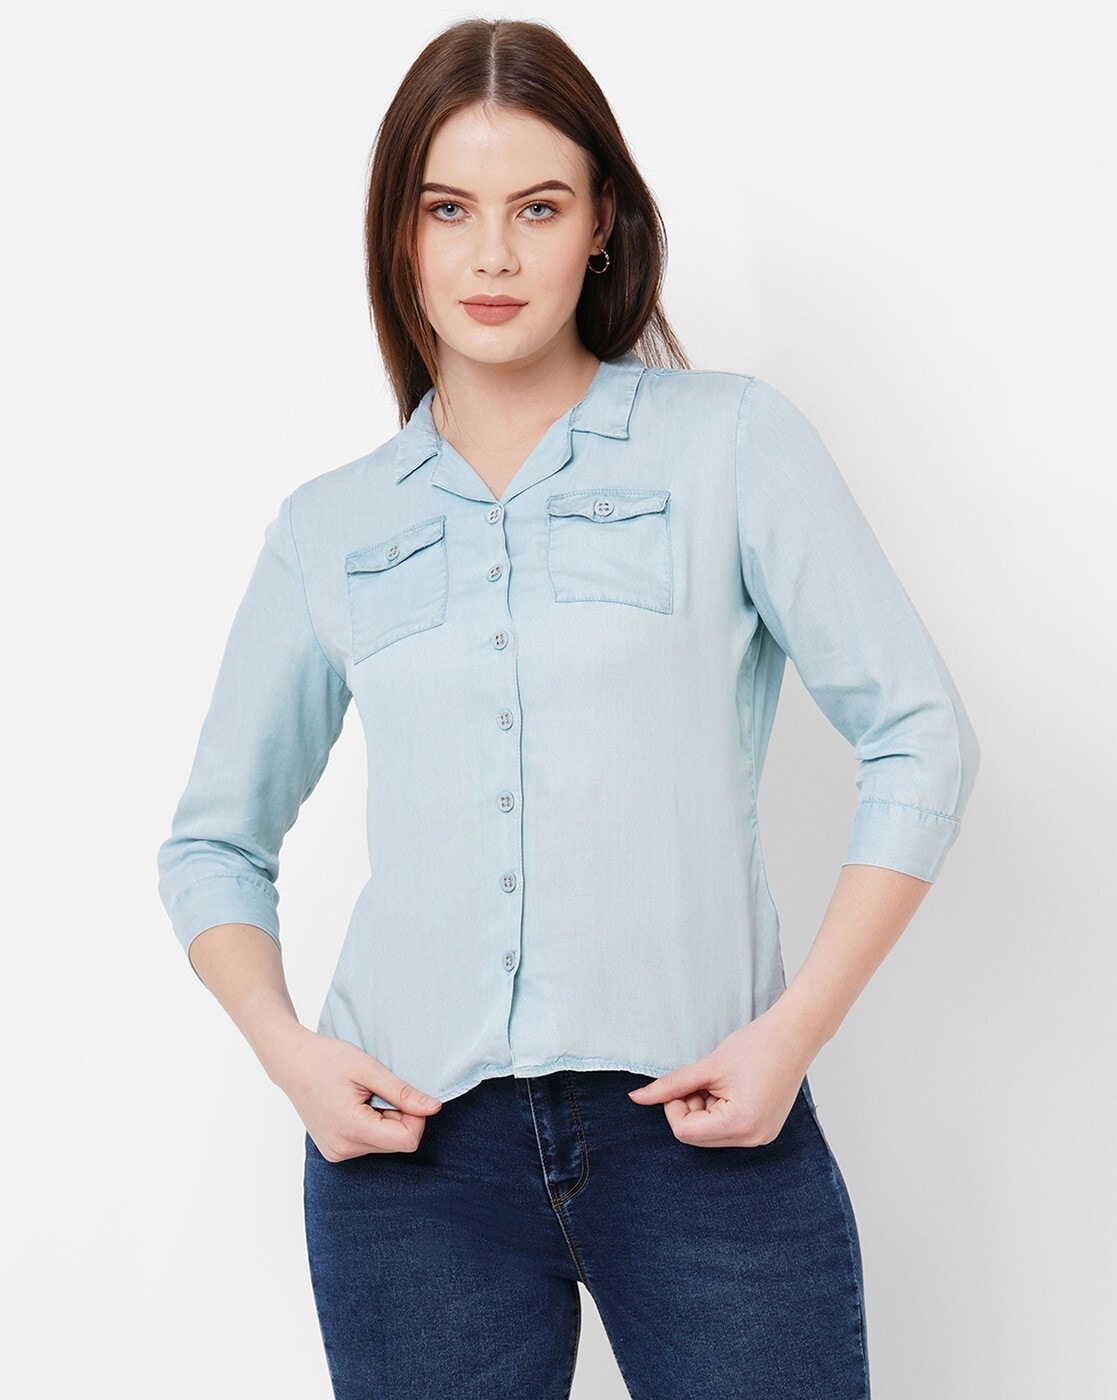 Womens Denim Shirt Top Ladies Fitted Stretch Blue shirts Size 8 10 12 6 |  eBay